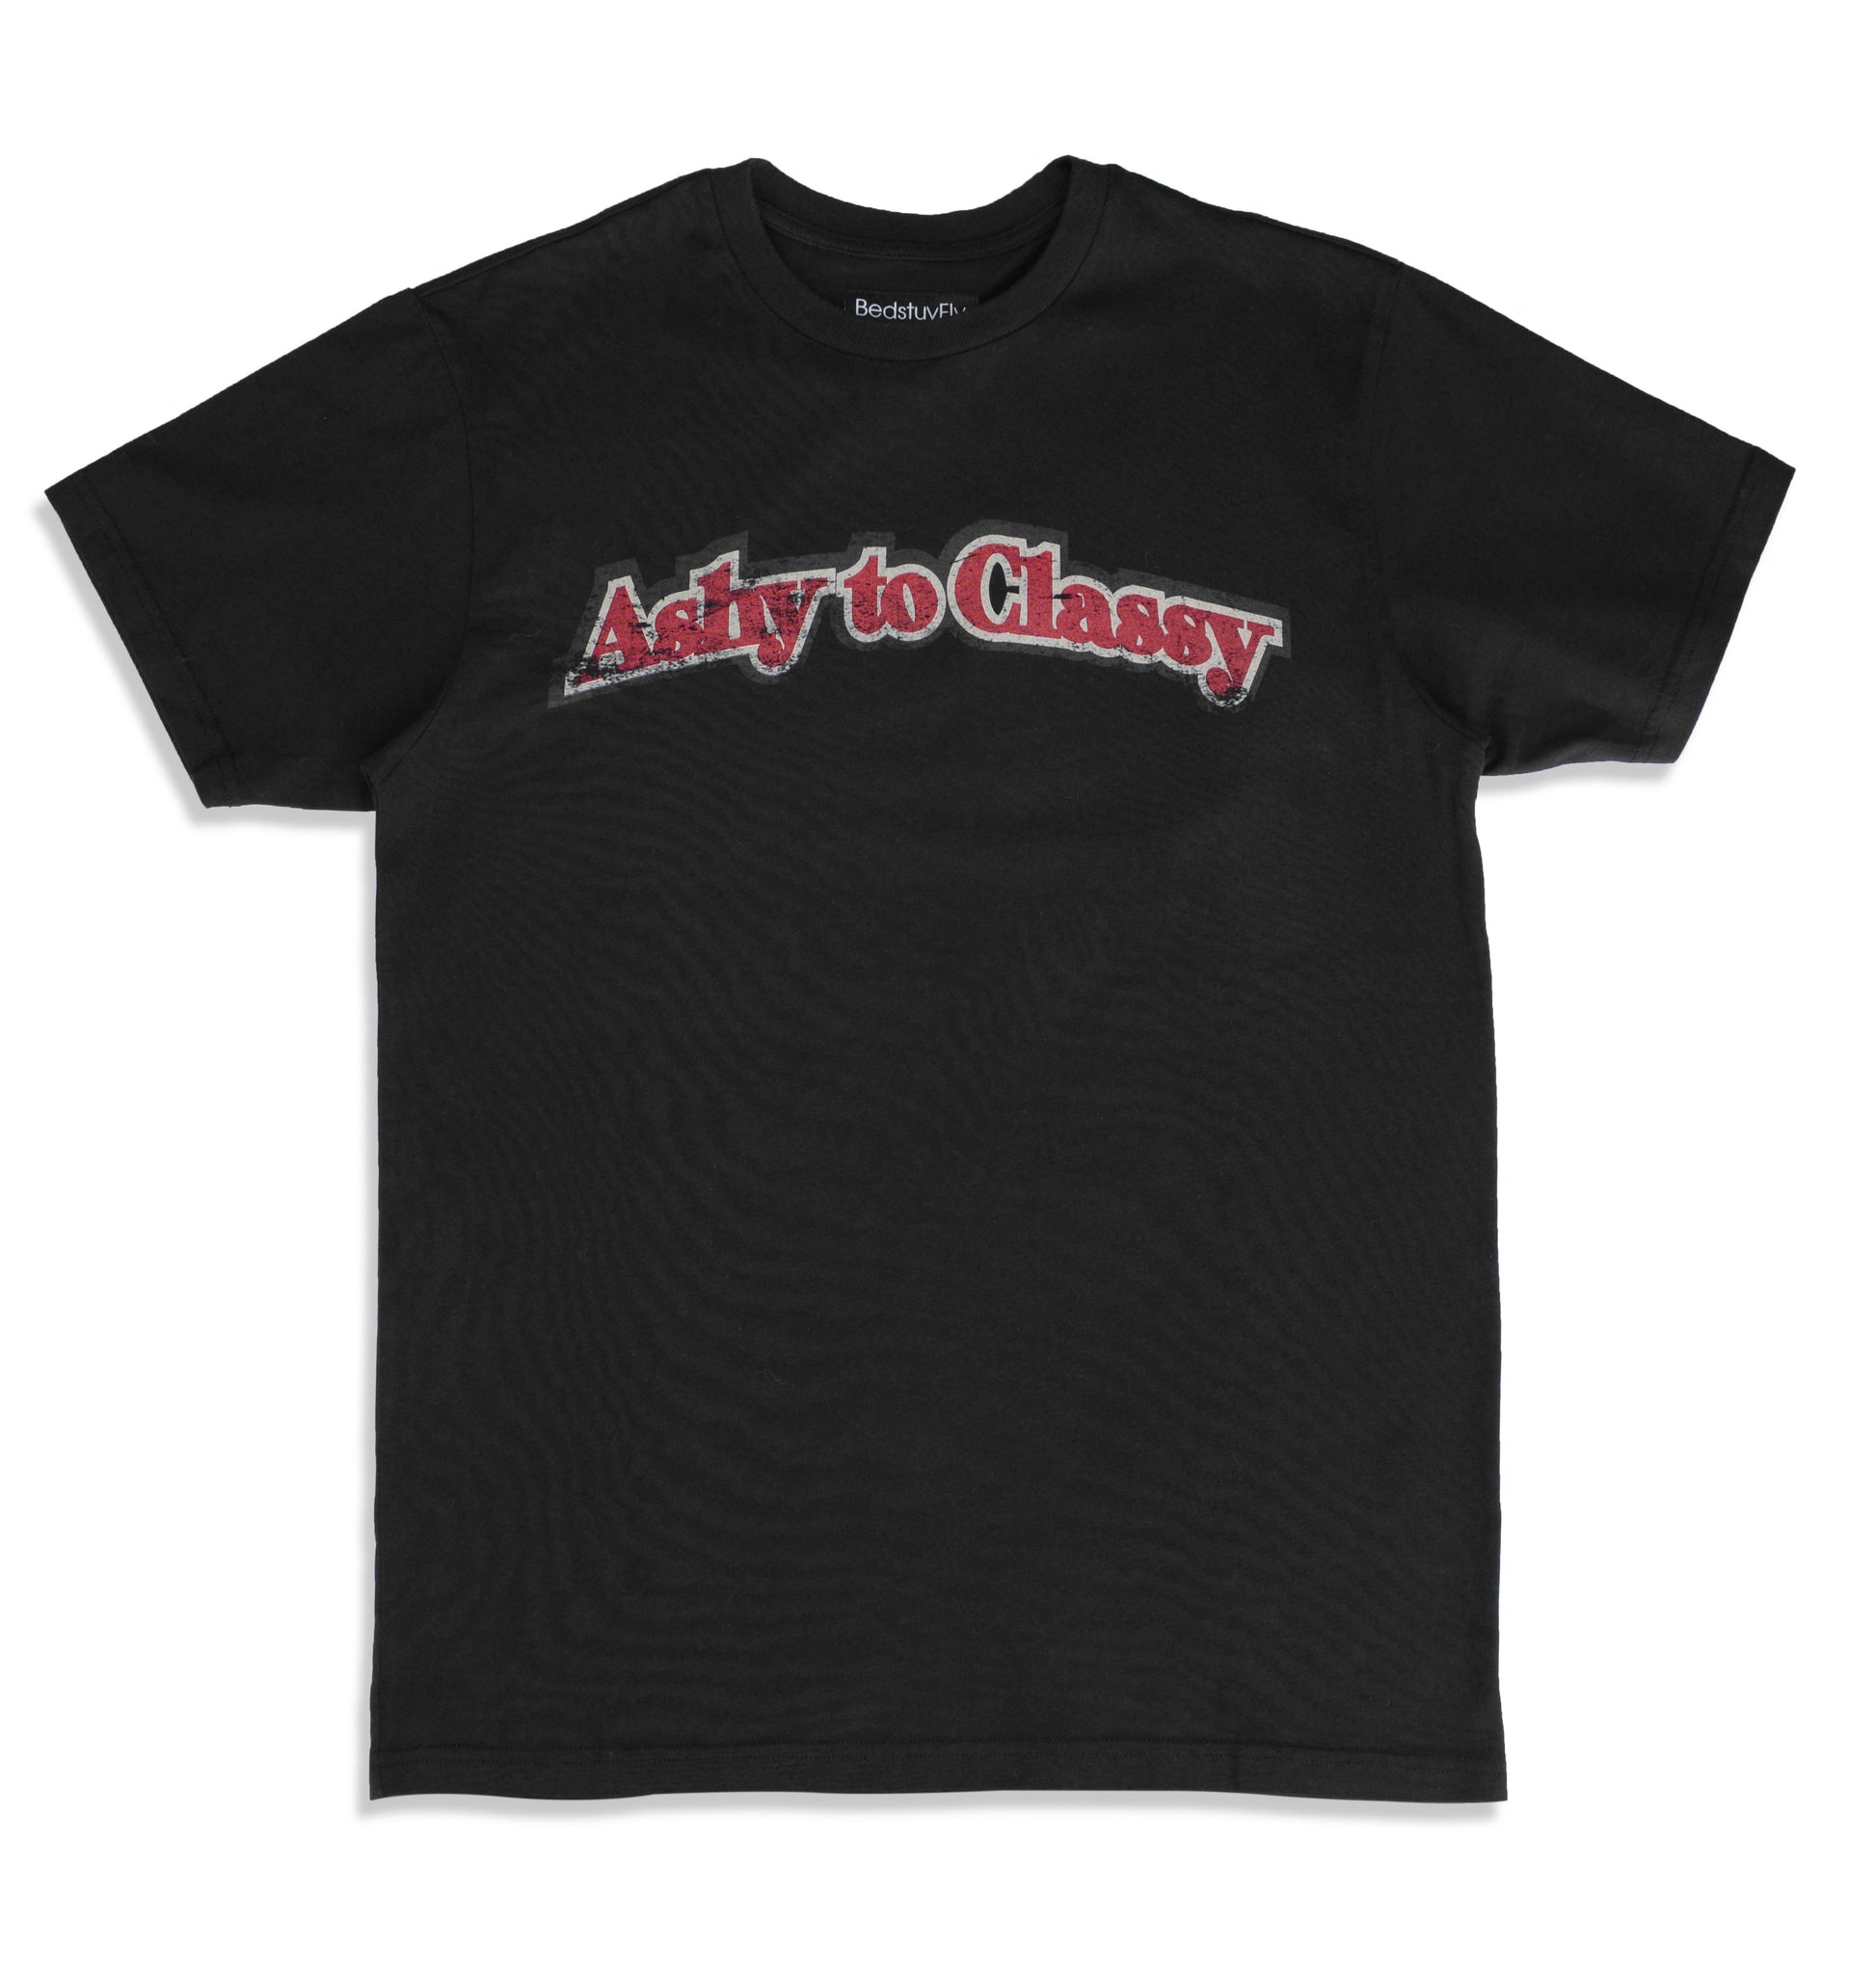 Ashy To Classy T-Shirt - Bedstuyfly